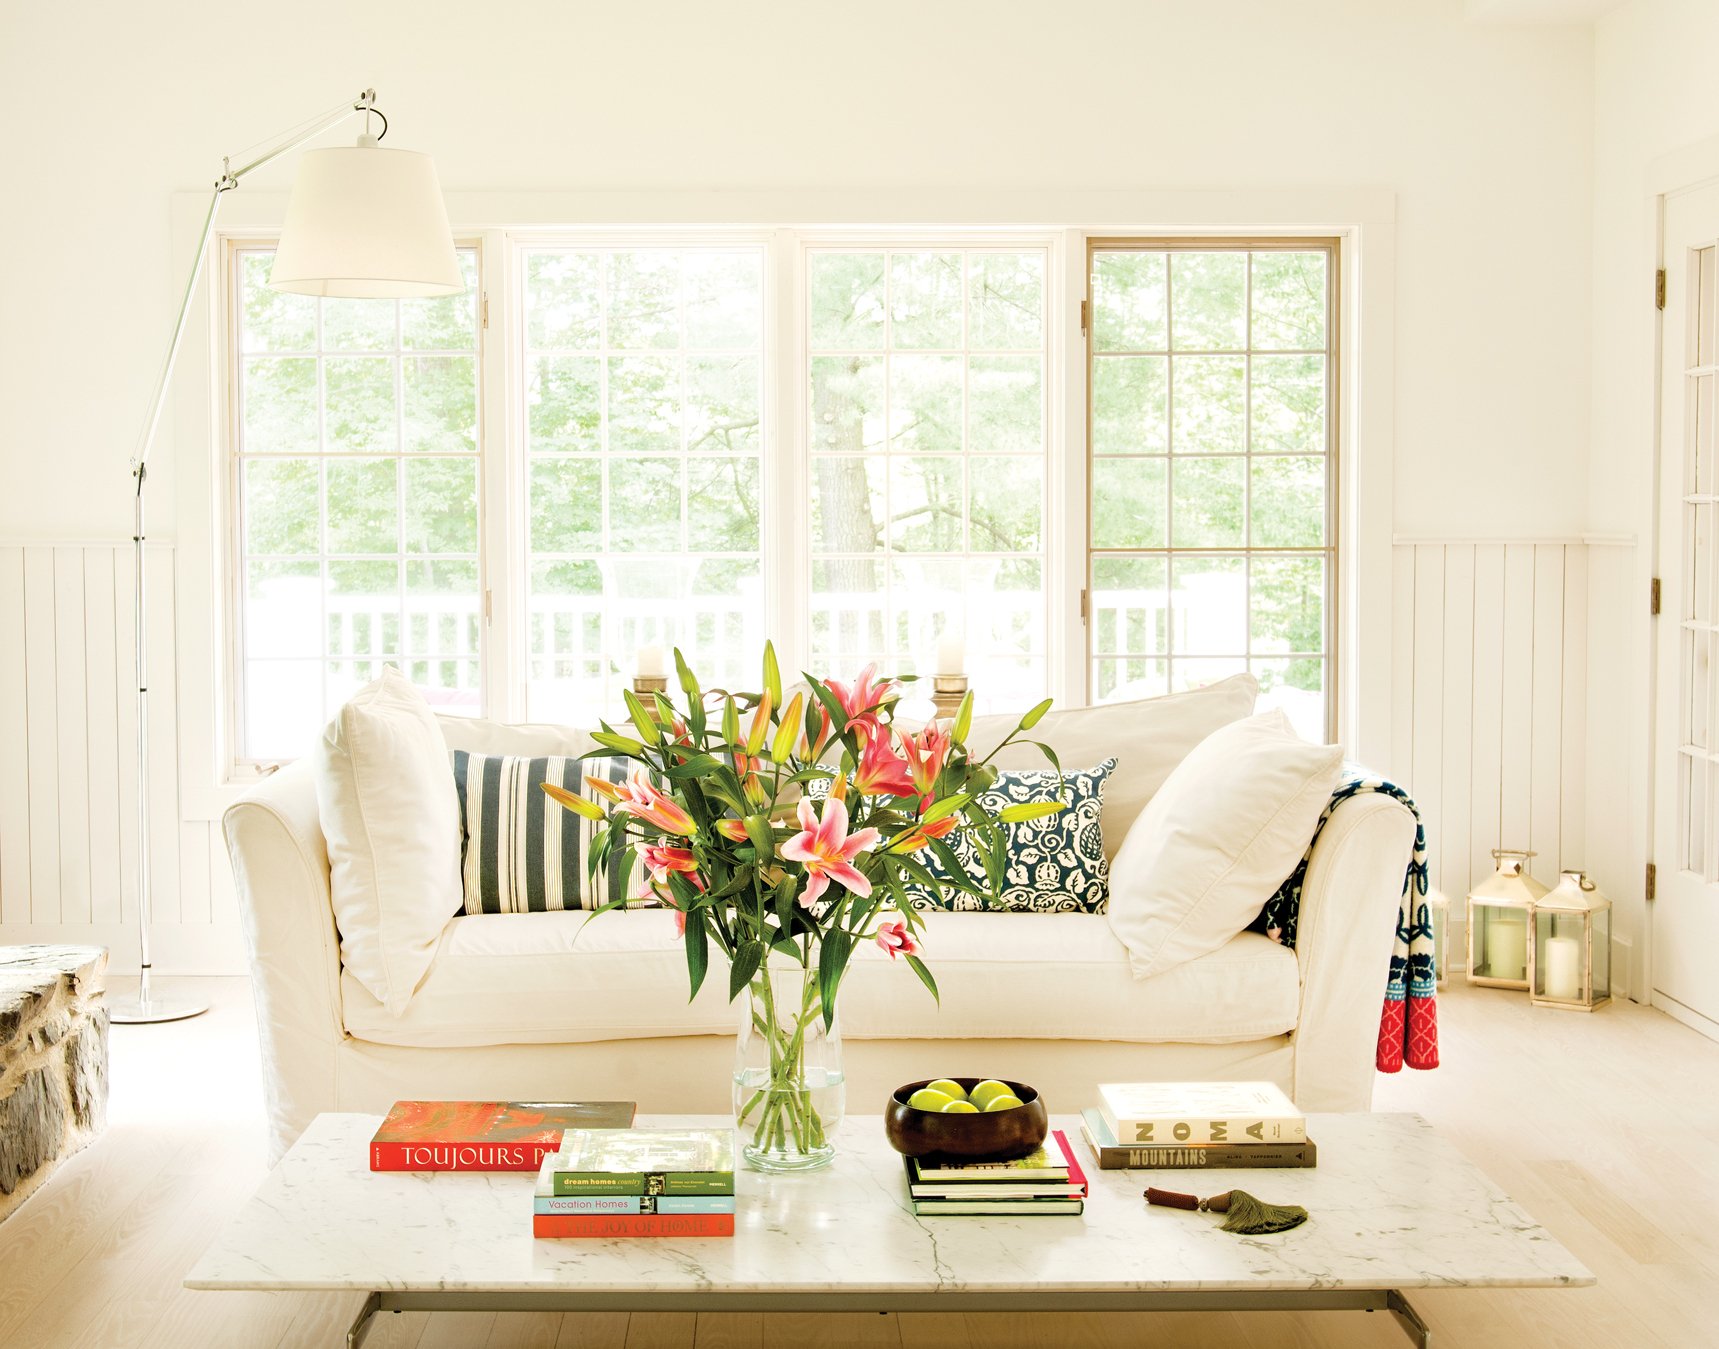 Modern, cozy home décor ideas: Seven tips - Chatelaine